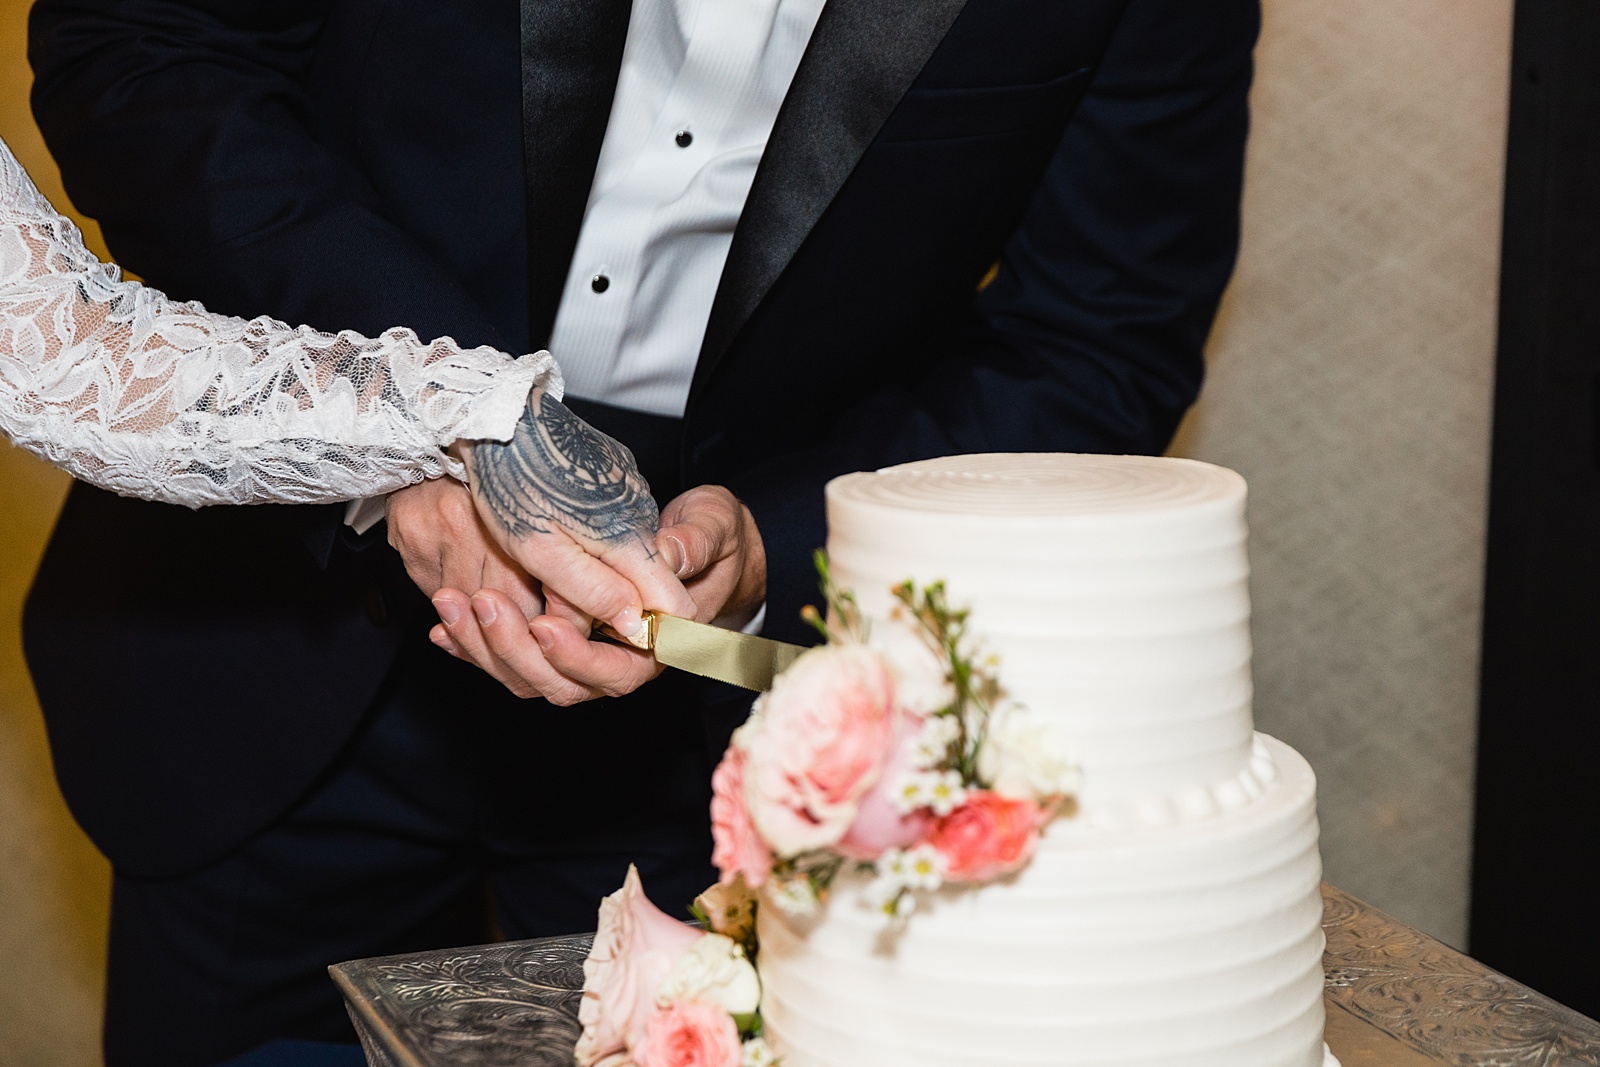 Bride and groom cutting their wedding cake at their backyard wedding reception by Arizona wedding photographer PMA Photography.